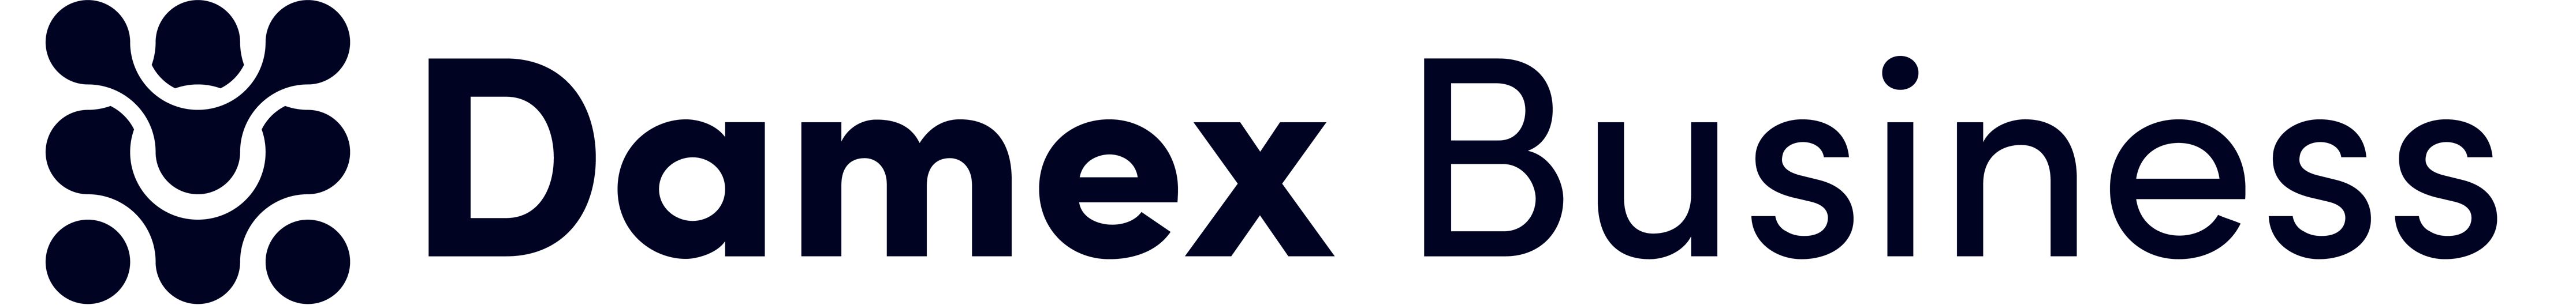 Damex business logo